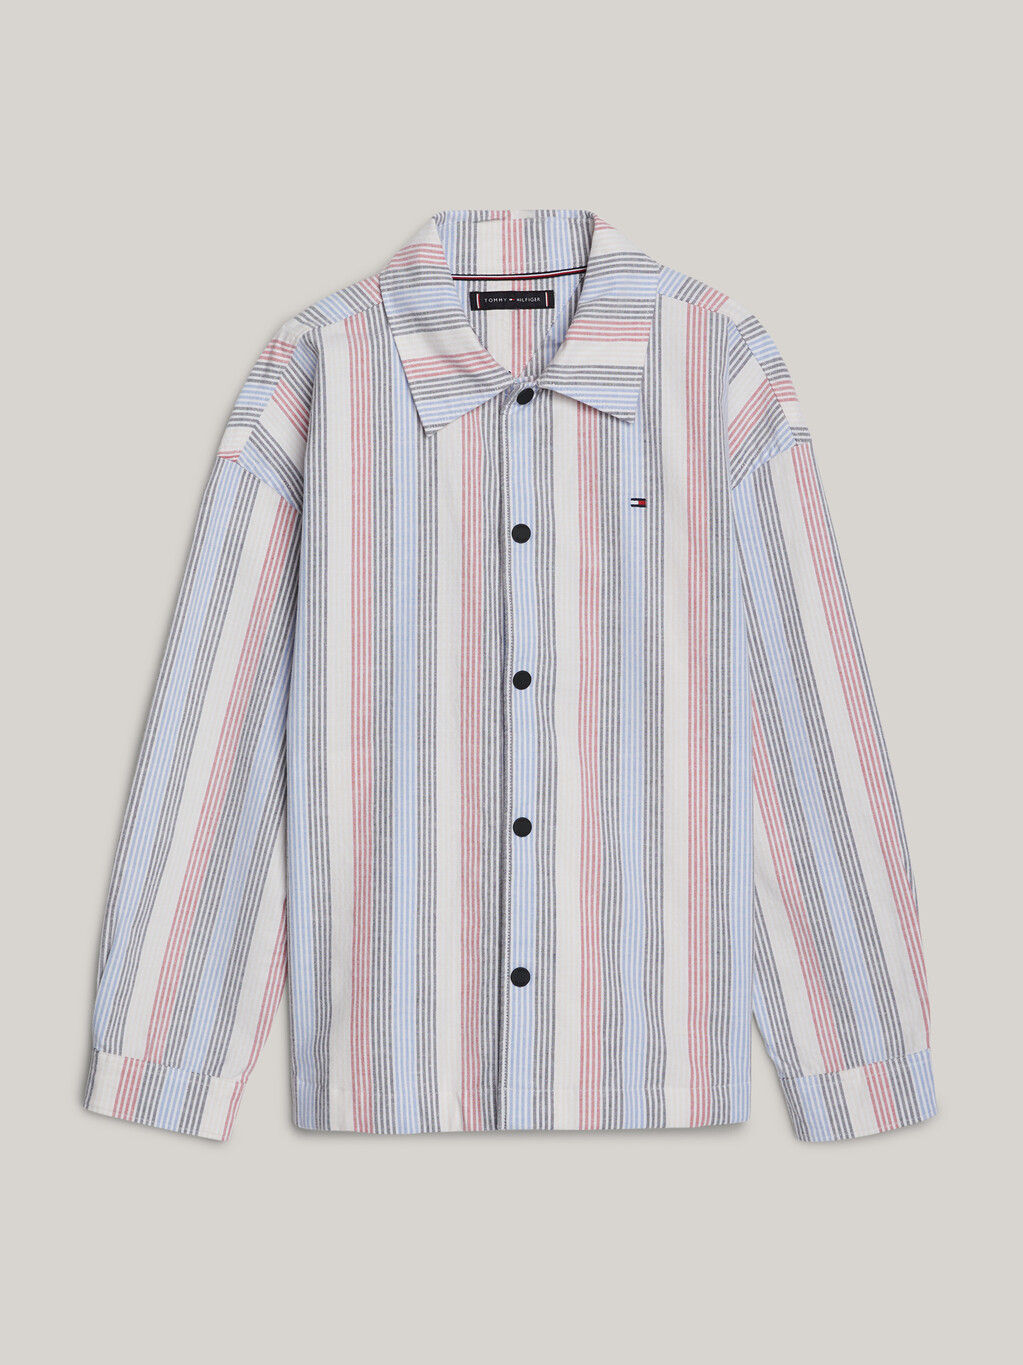 Essential Flex Ithaca Stripe Regular Shirt, White Base/Green/Navy Stripes, hi-res